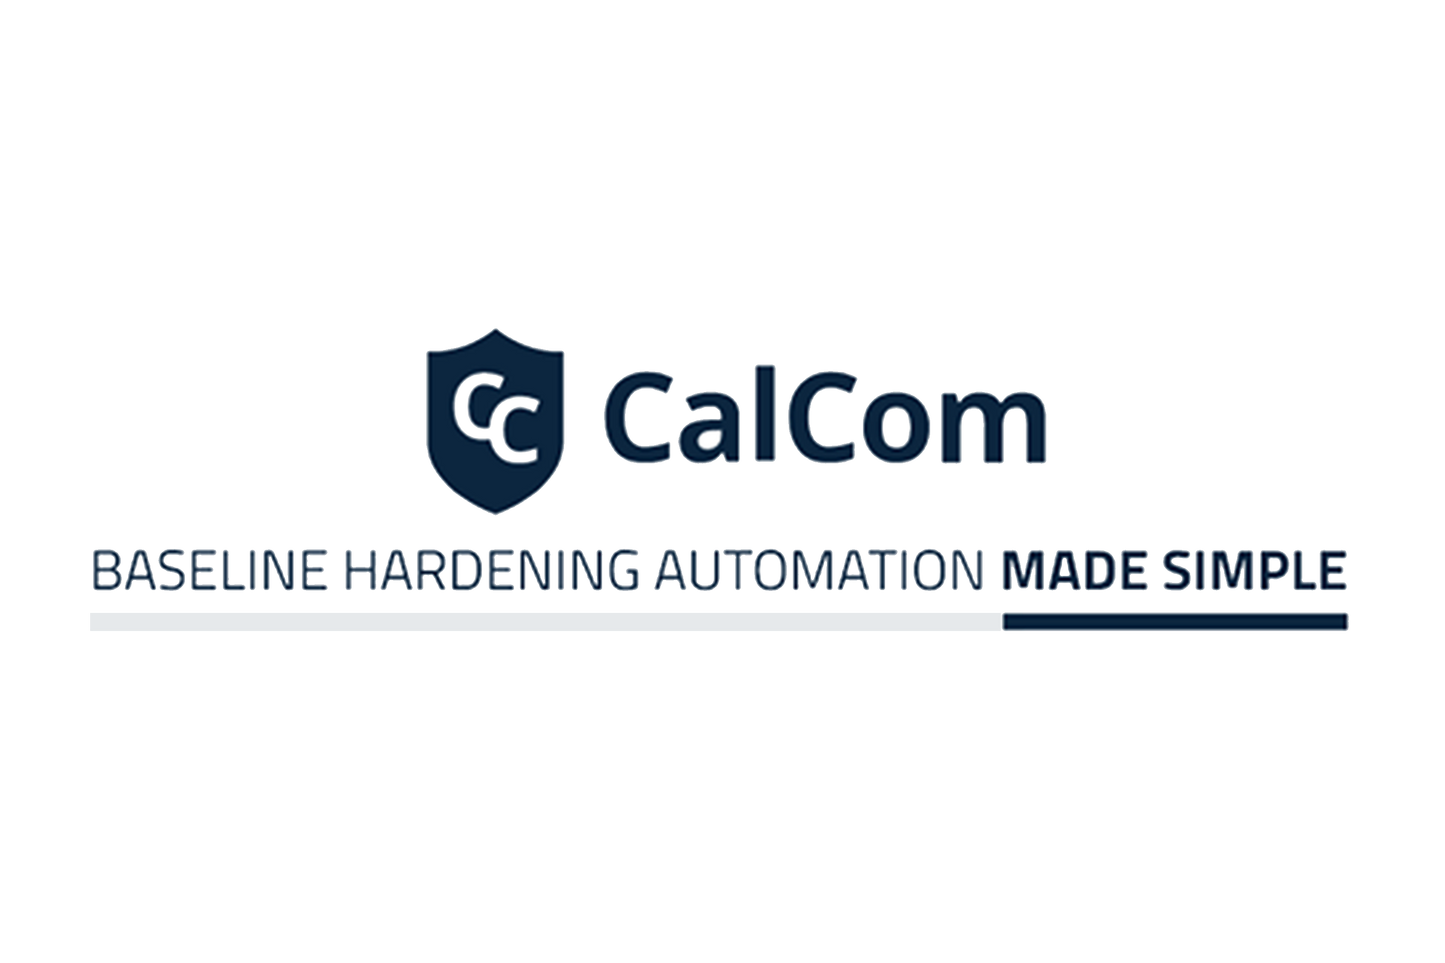 1 year Calcom Hardening Solution subscription per server - minimum of 100 servers